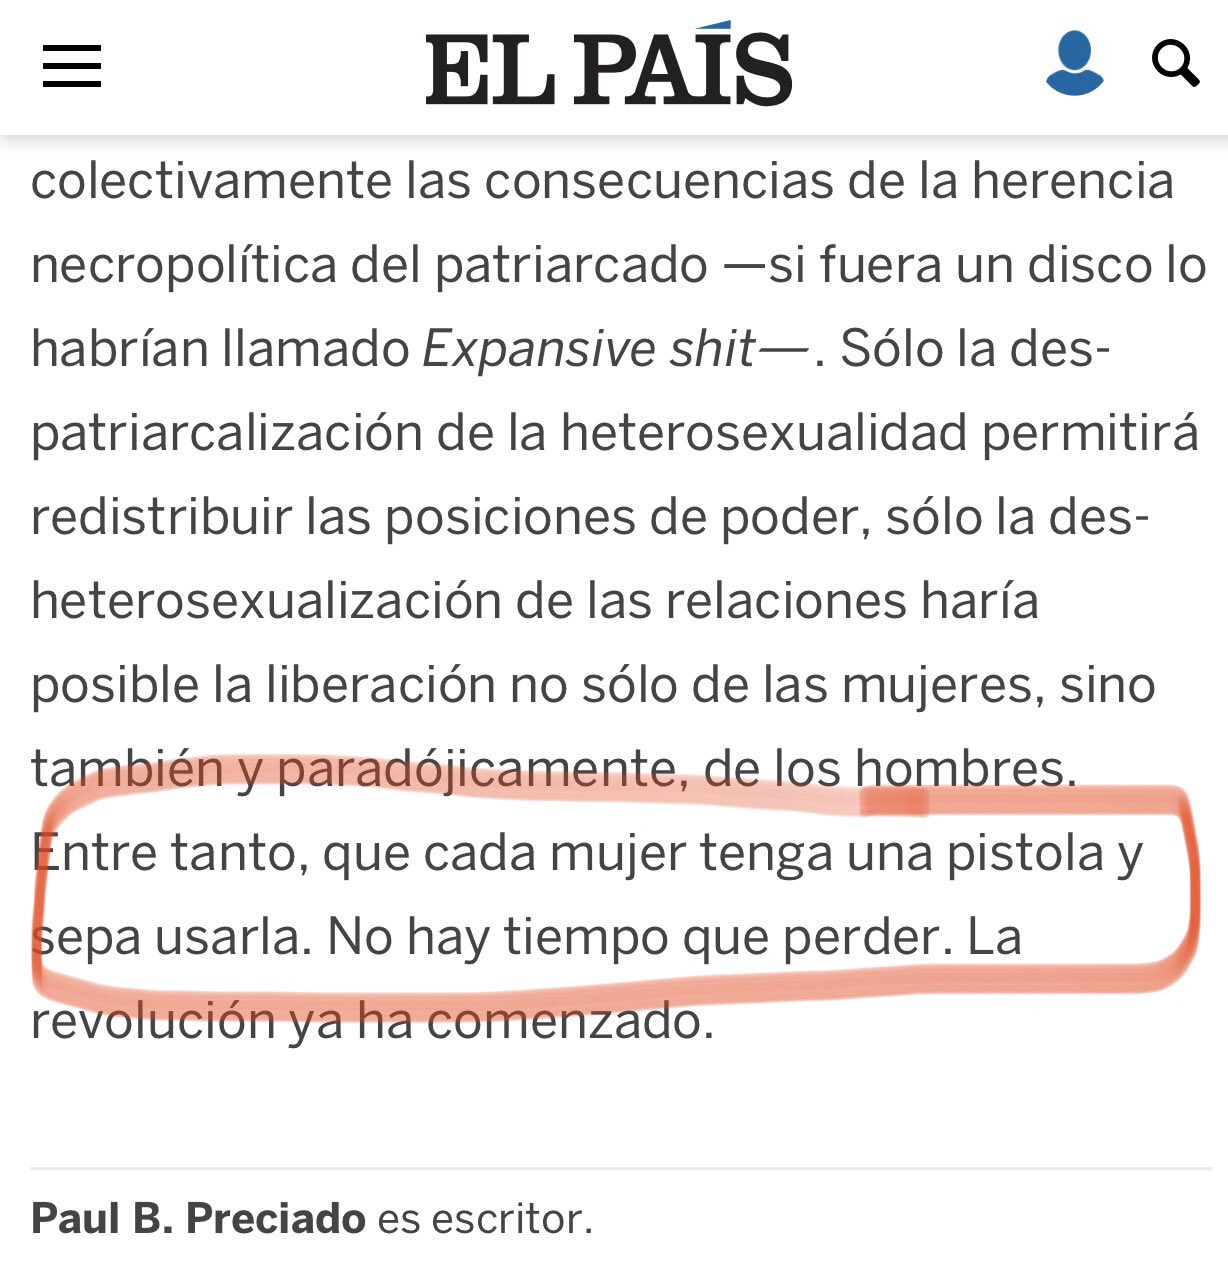 El País gone crazy